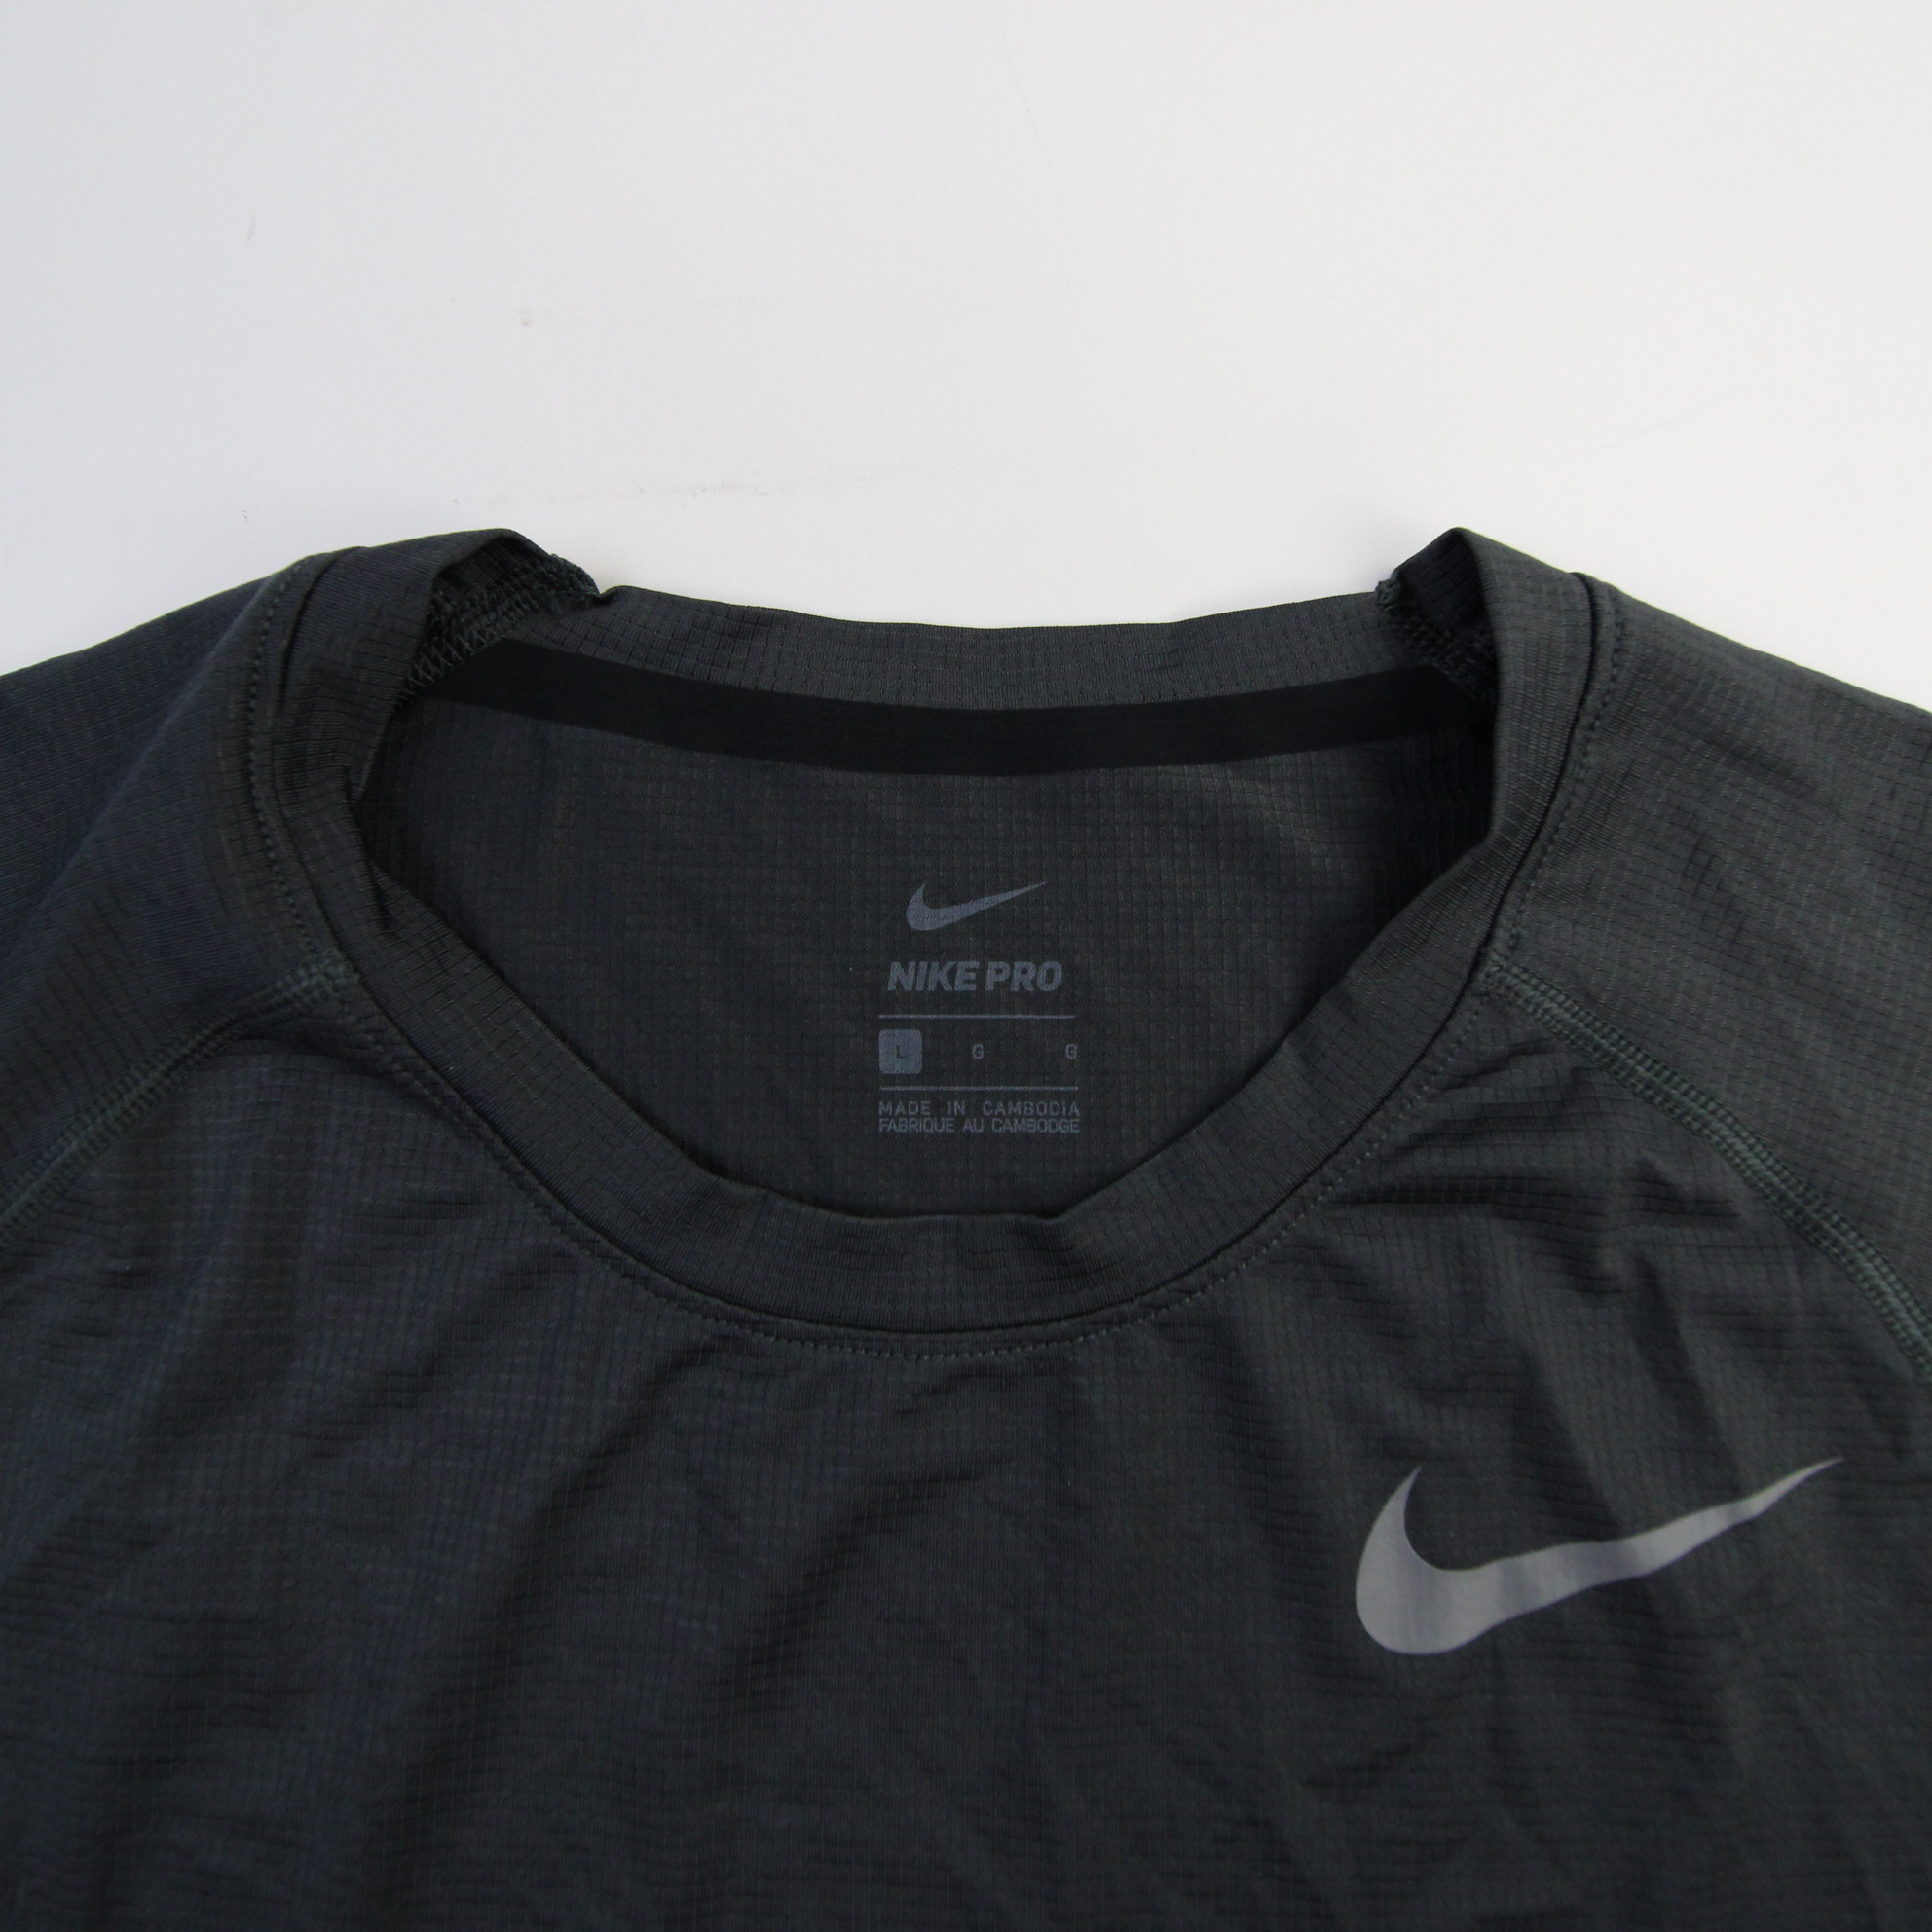 Nike Pro Sleeveless Shirt Men's Dark Gray Used | eBay